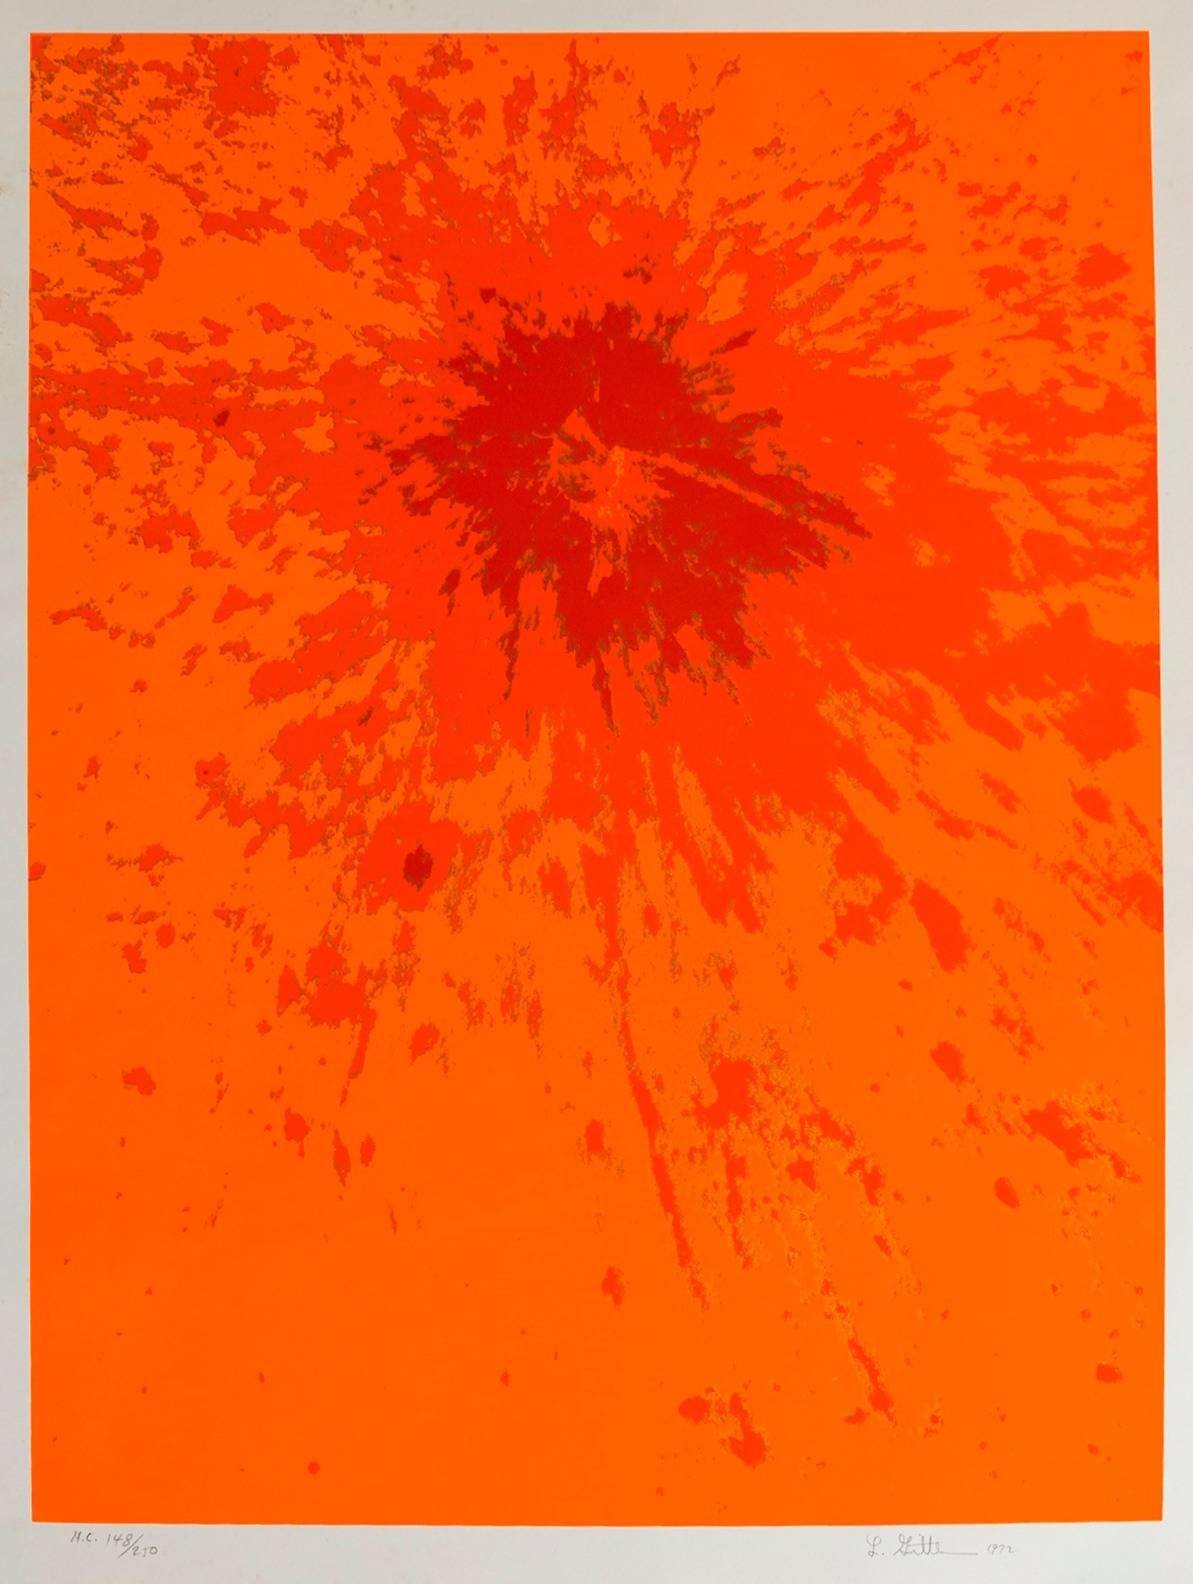 Len Gittleman Abstract Print - Lunar Landscape Abstract Signed Numbered Screenprint Orange